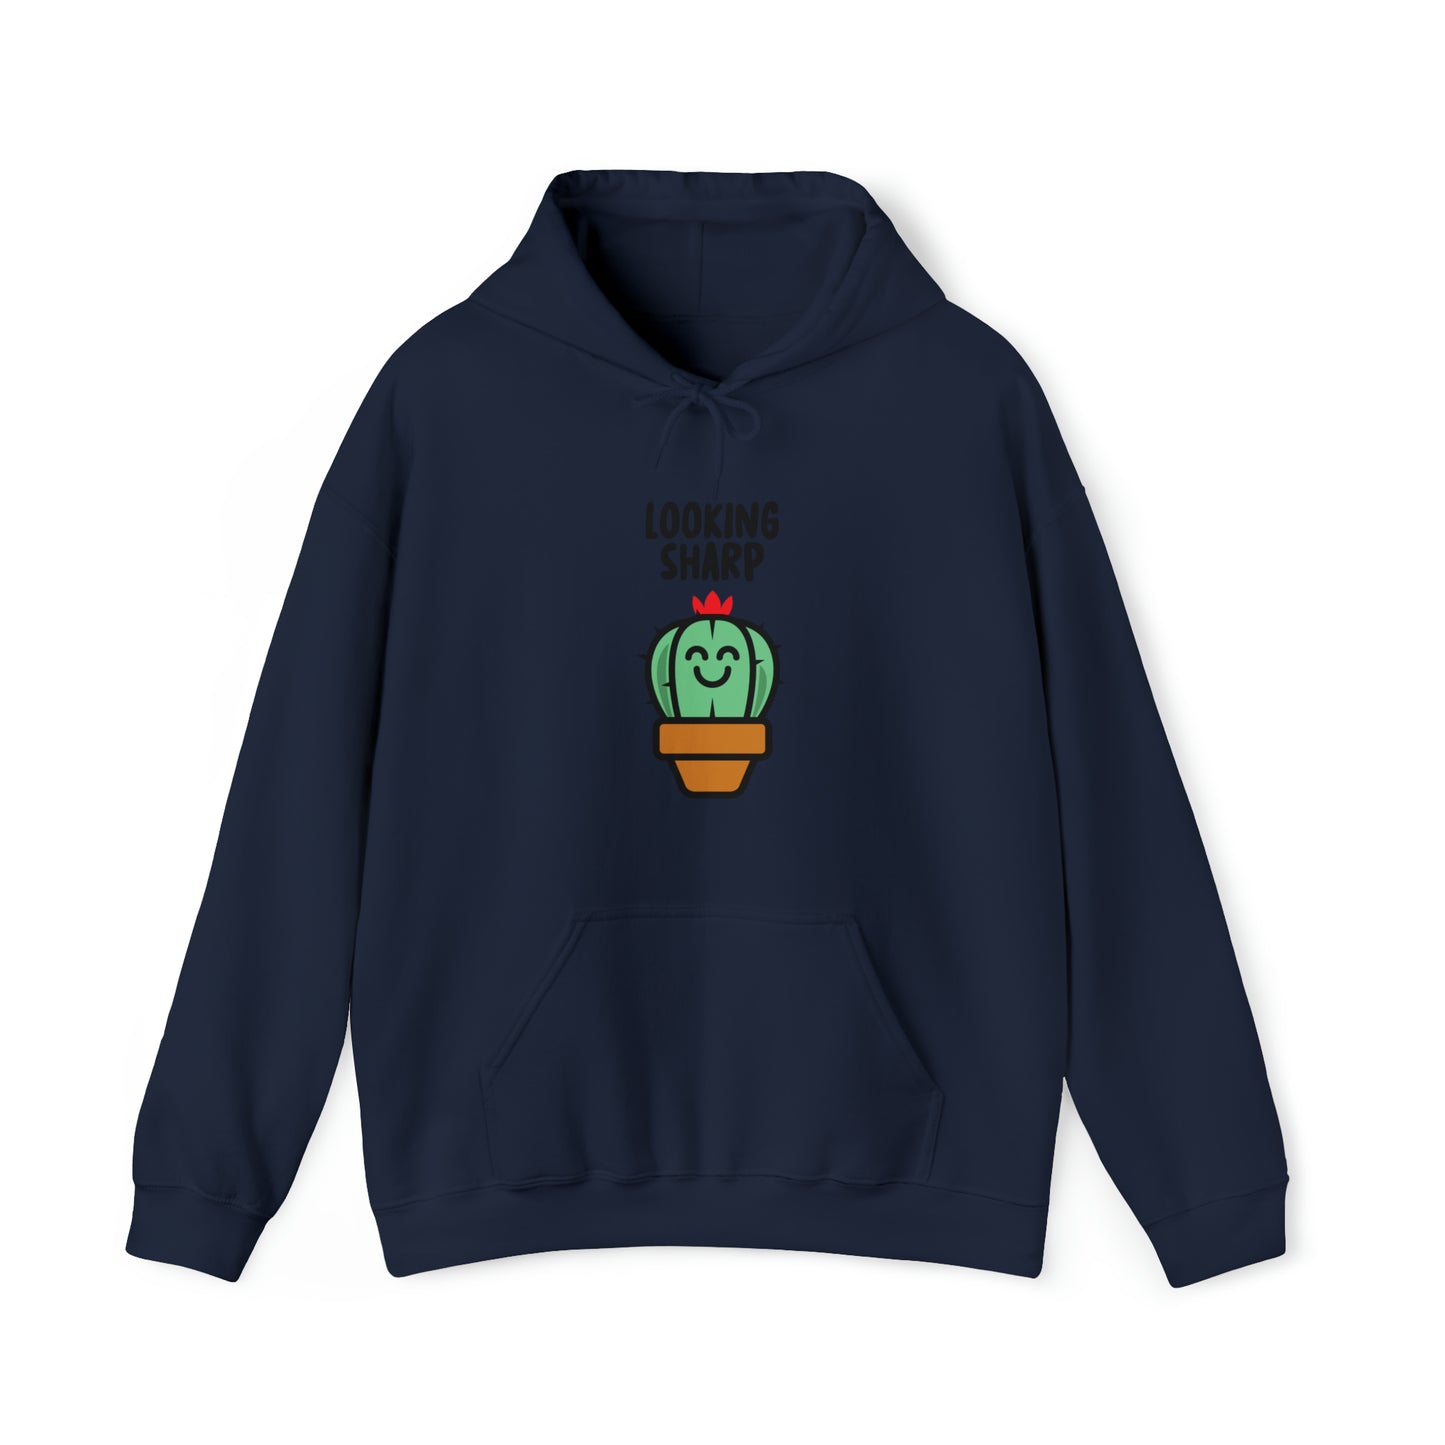 Custom Parody Hooded Sweatshirt, Looking Sharp Cactus design